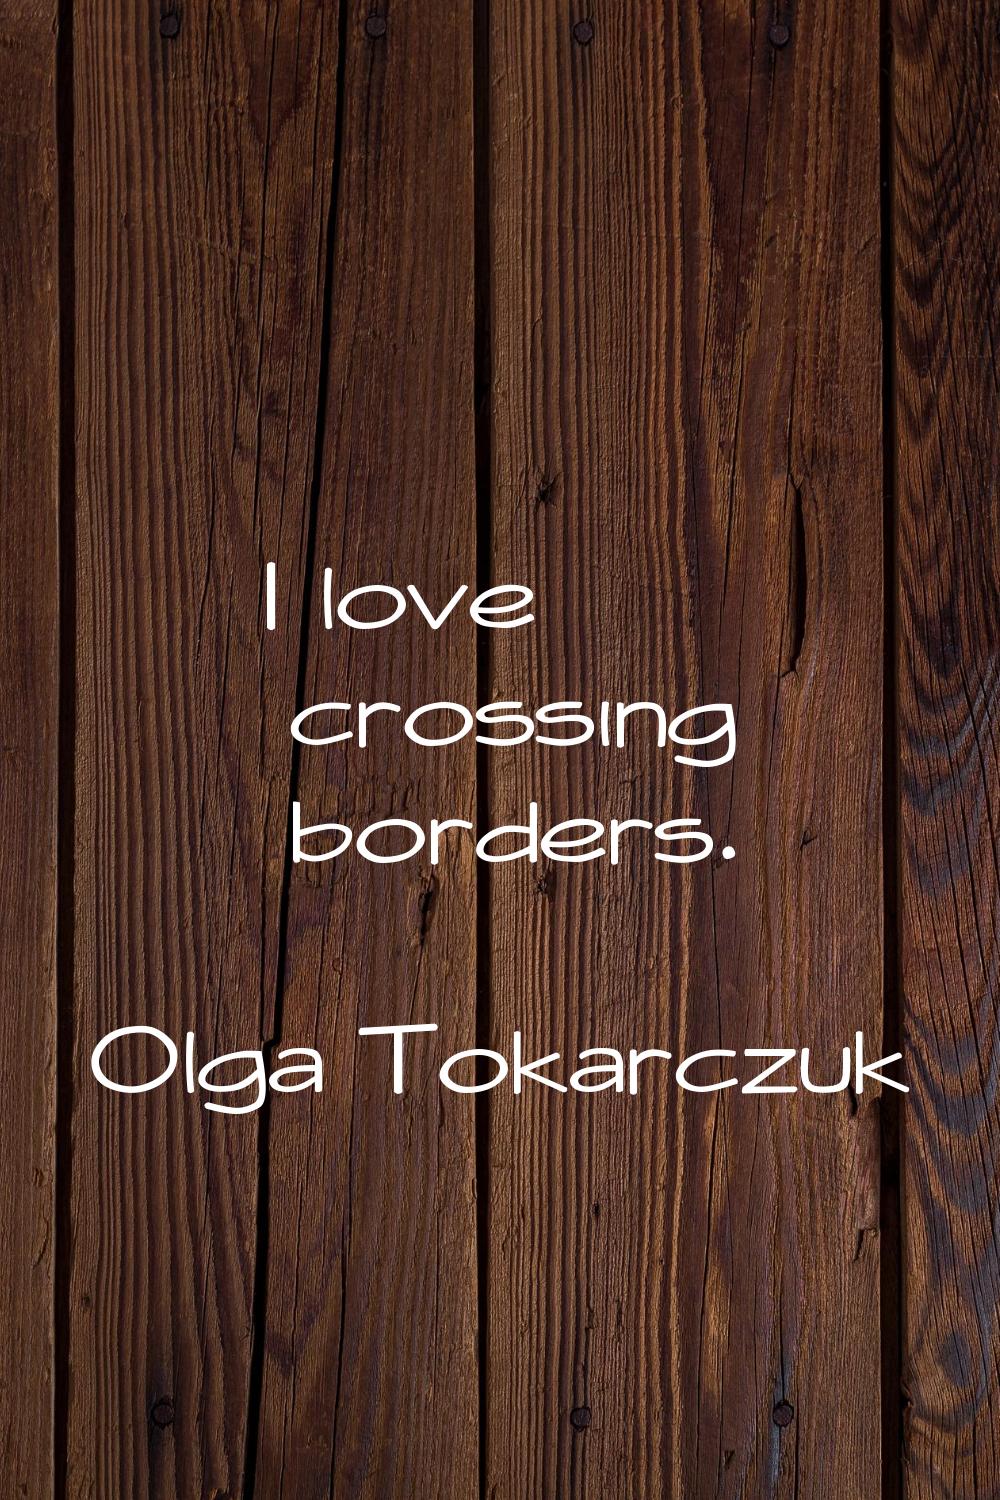 I love crossing borders.